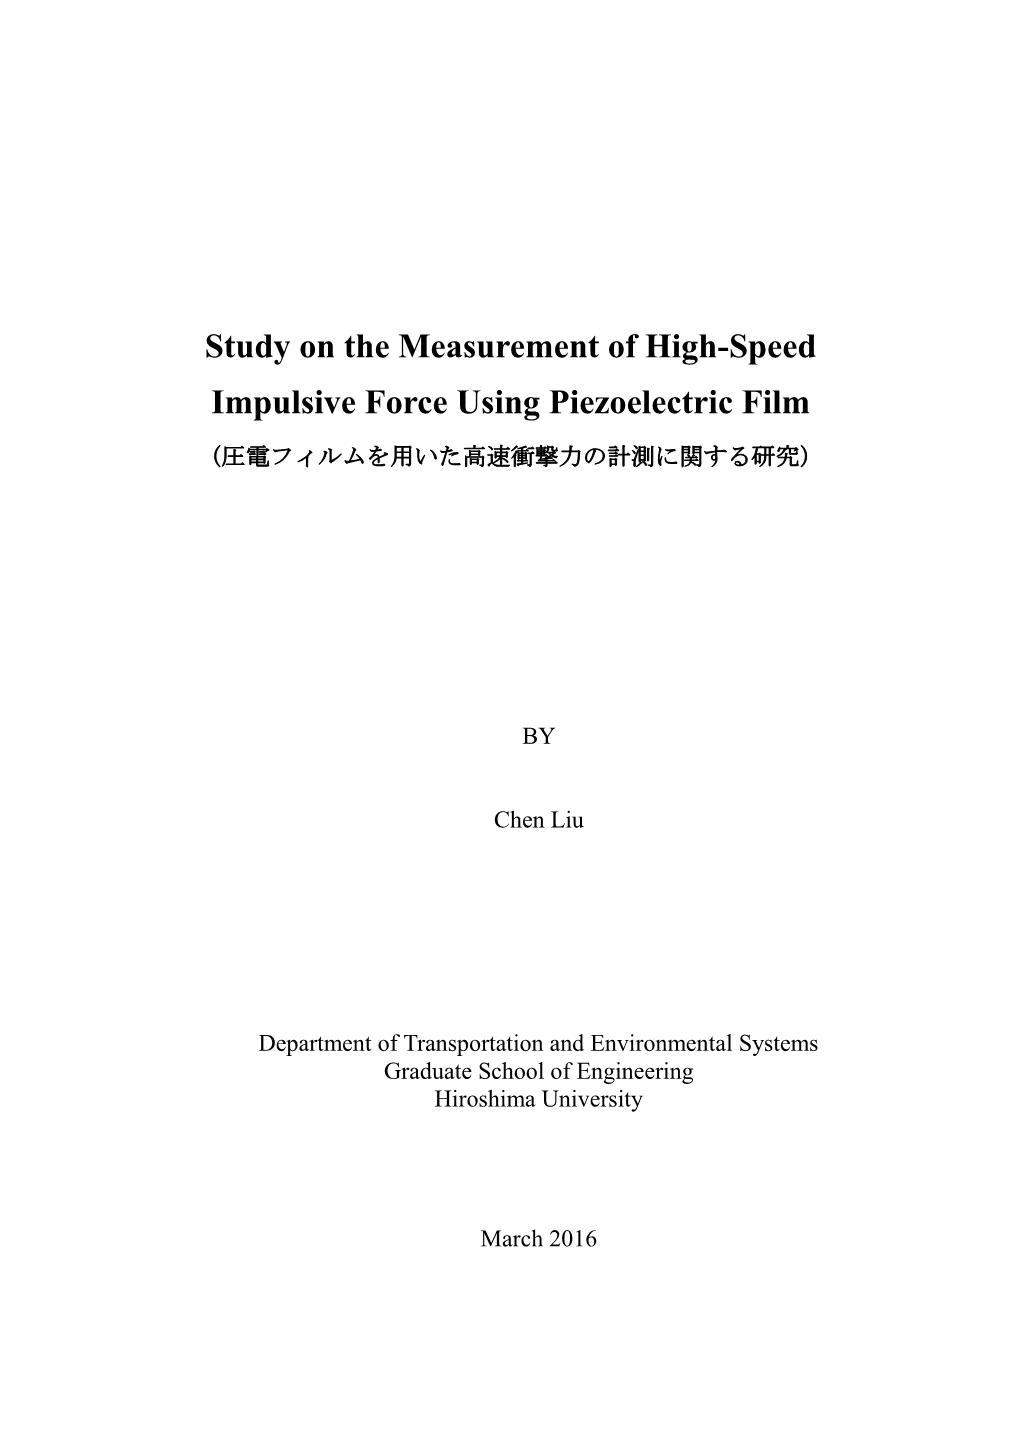 Study on the Measurement of High-Speed Impulsive Force Using Piezoelectric Film （圧電フィルムを用いた高速衝撃力の計測に関する研究）